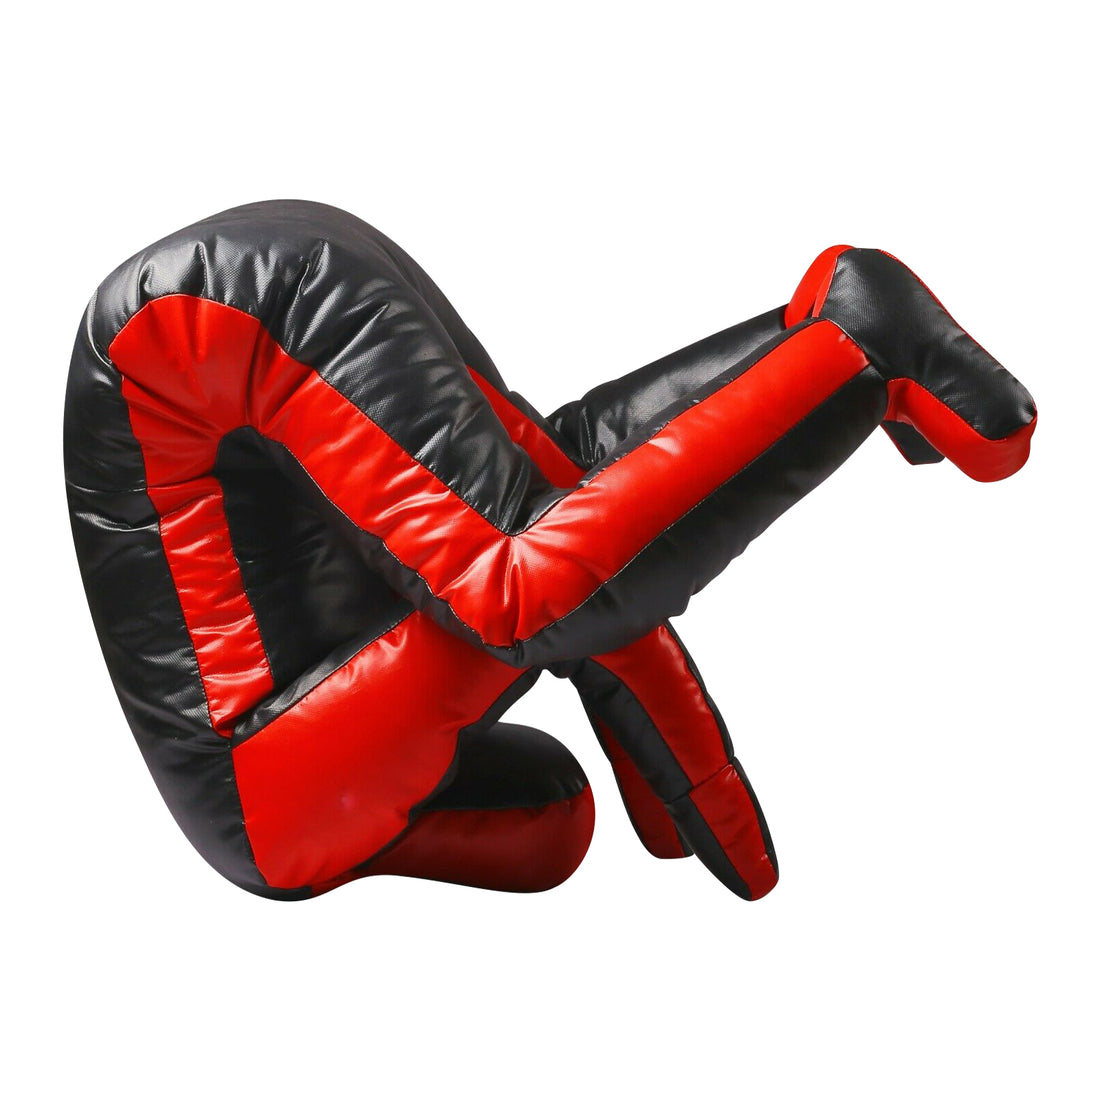 Brazilian Jiu Jitsu Leather Grappling Kneeling Dummy Boxing judo MMA - Black/Red - LEATHER - DEFENDING POSITION